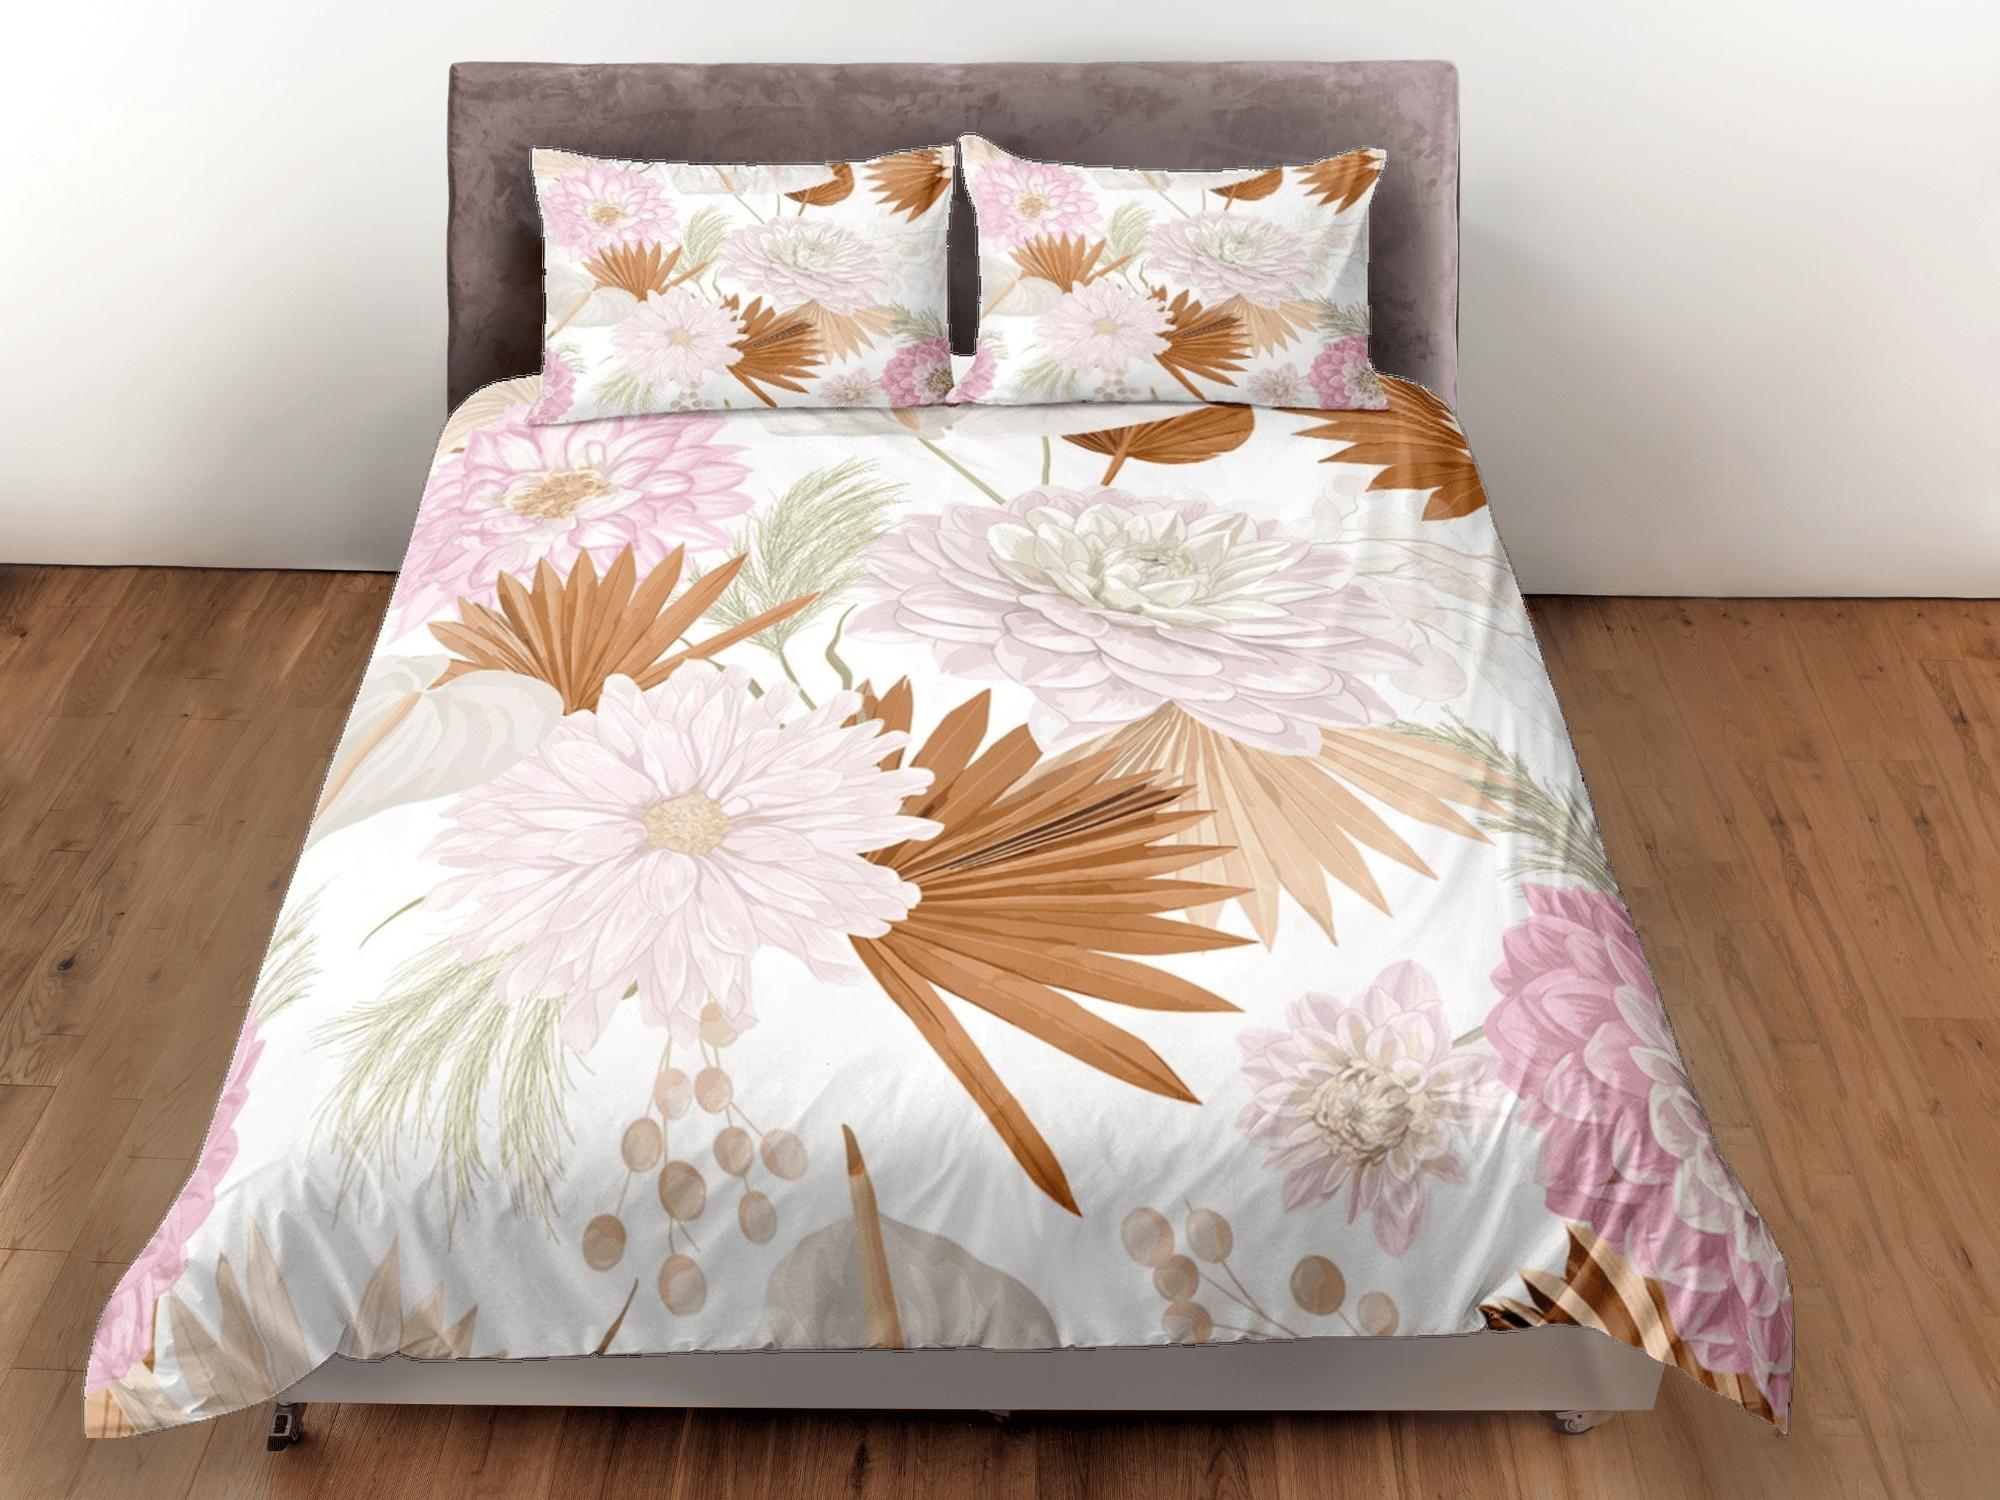 daintyduvet Bohemian pink floral duvet cover colorful bedding, teen girl bedroom, baby girl crib bedding boho maximalist bedspread aesthetic bedding